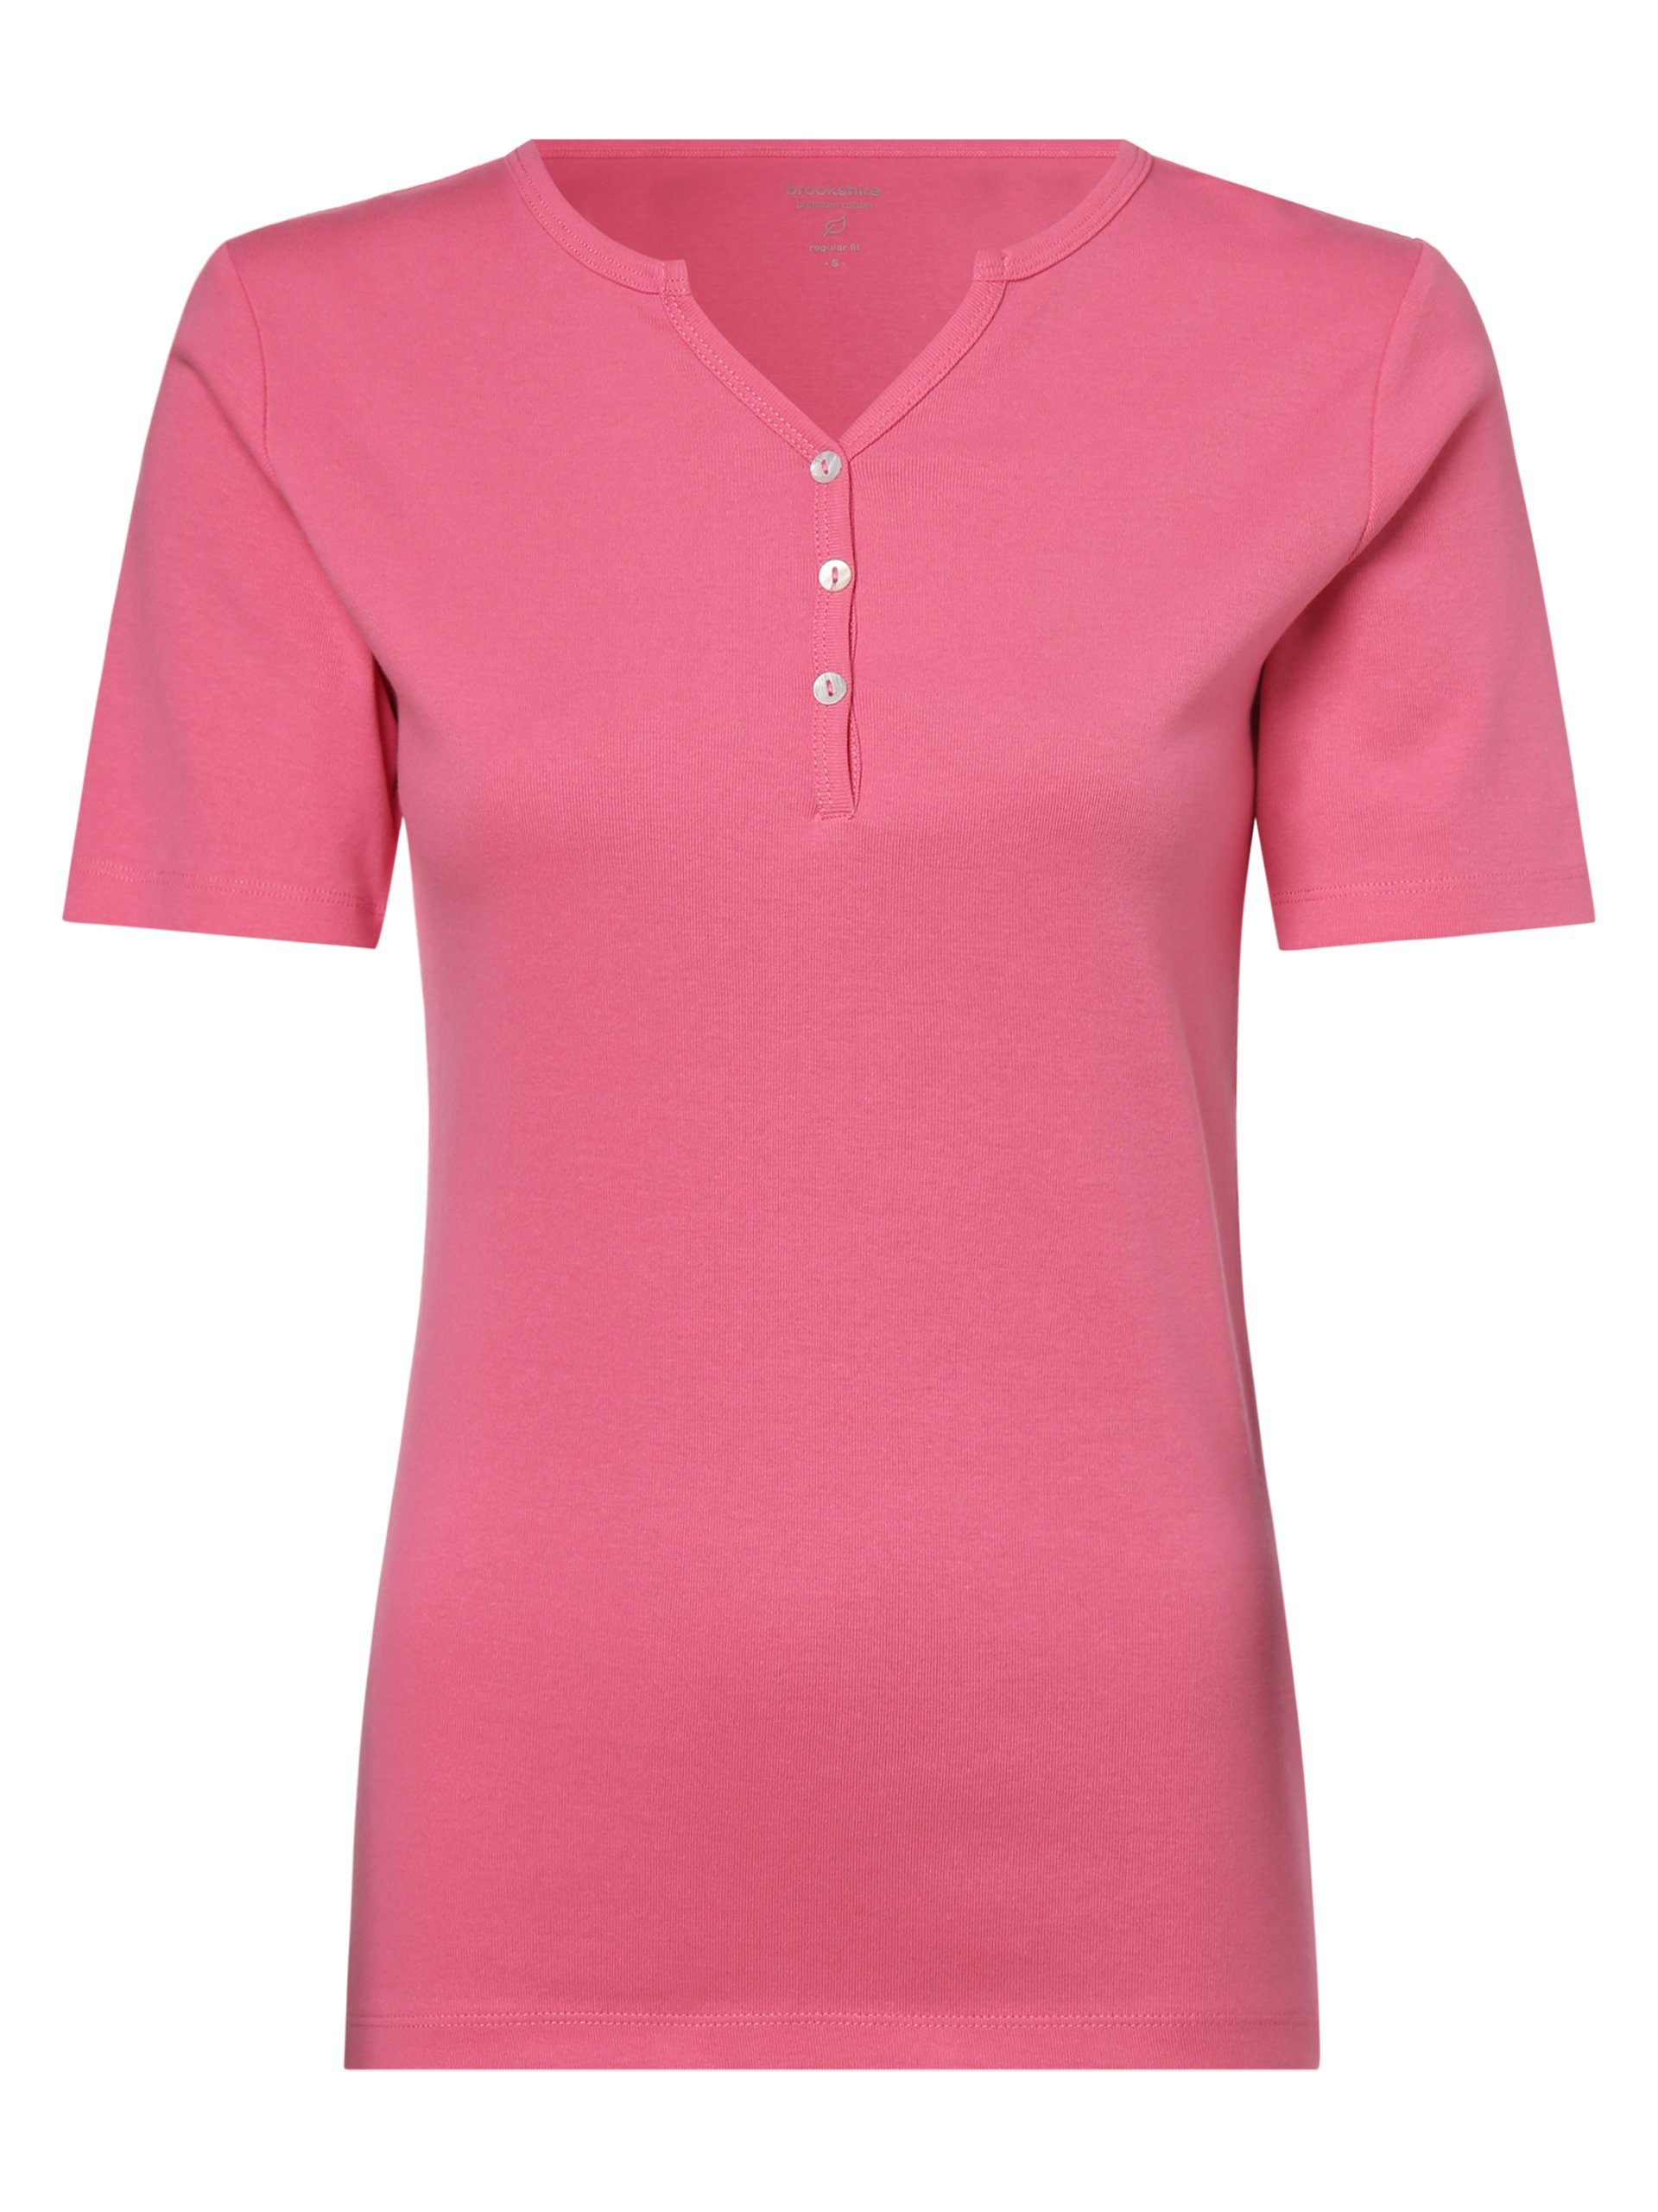 brookshire T-Shirt pink